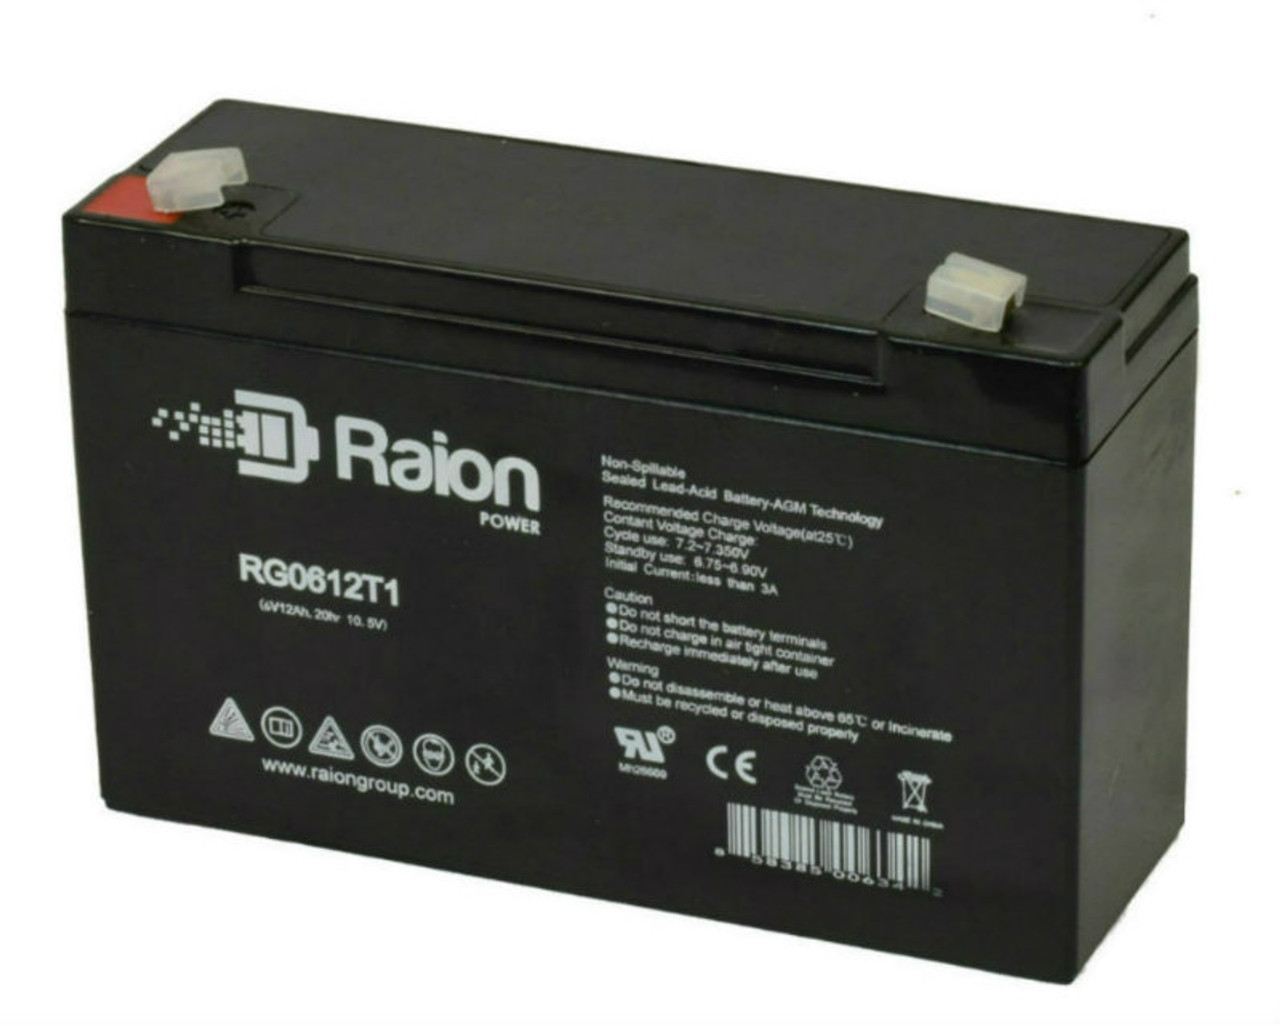 Raion Power RG06120T1 Replacement Emergency Light Battery for Emergi-Lite 12ILSM36